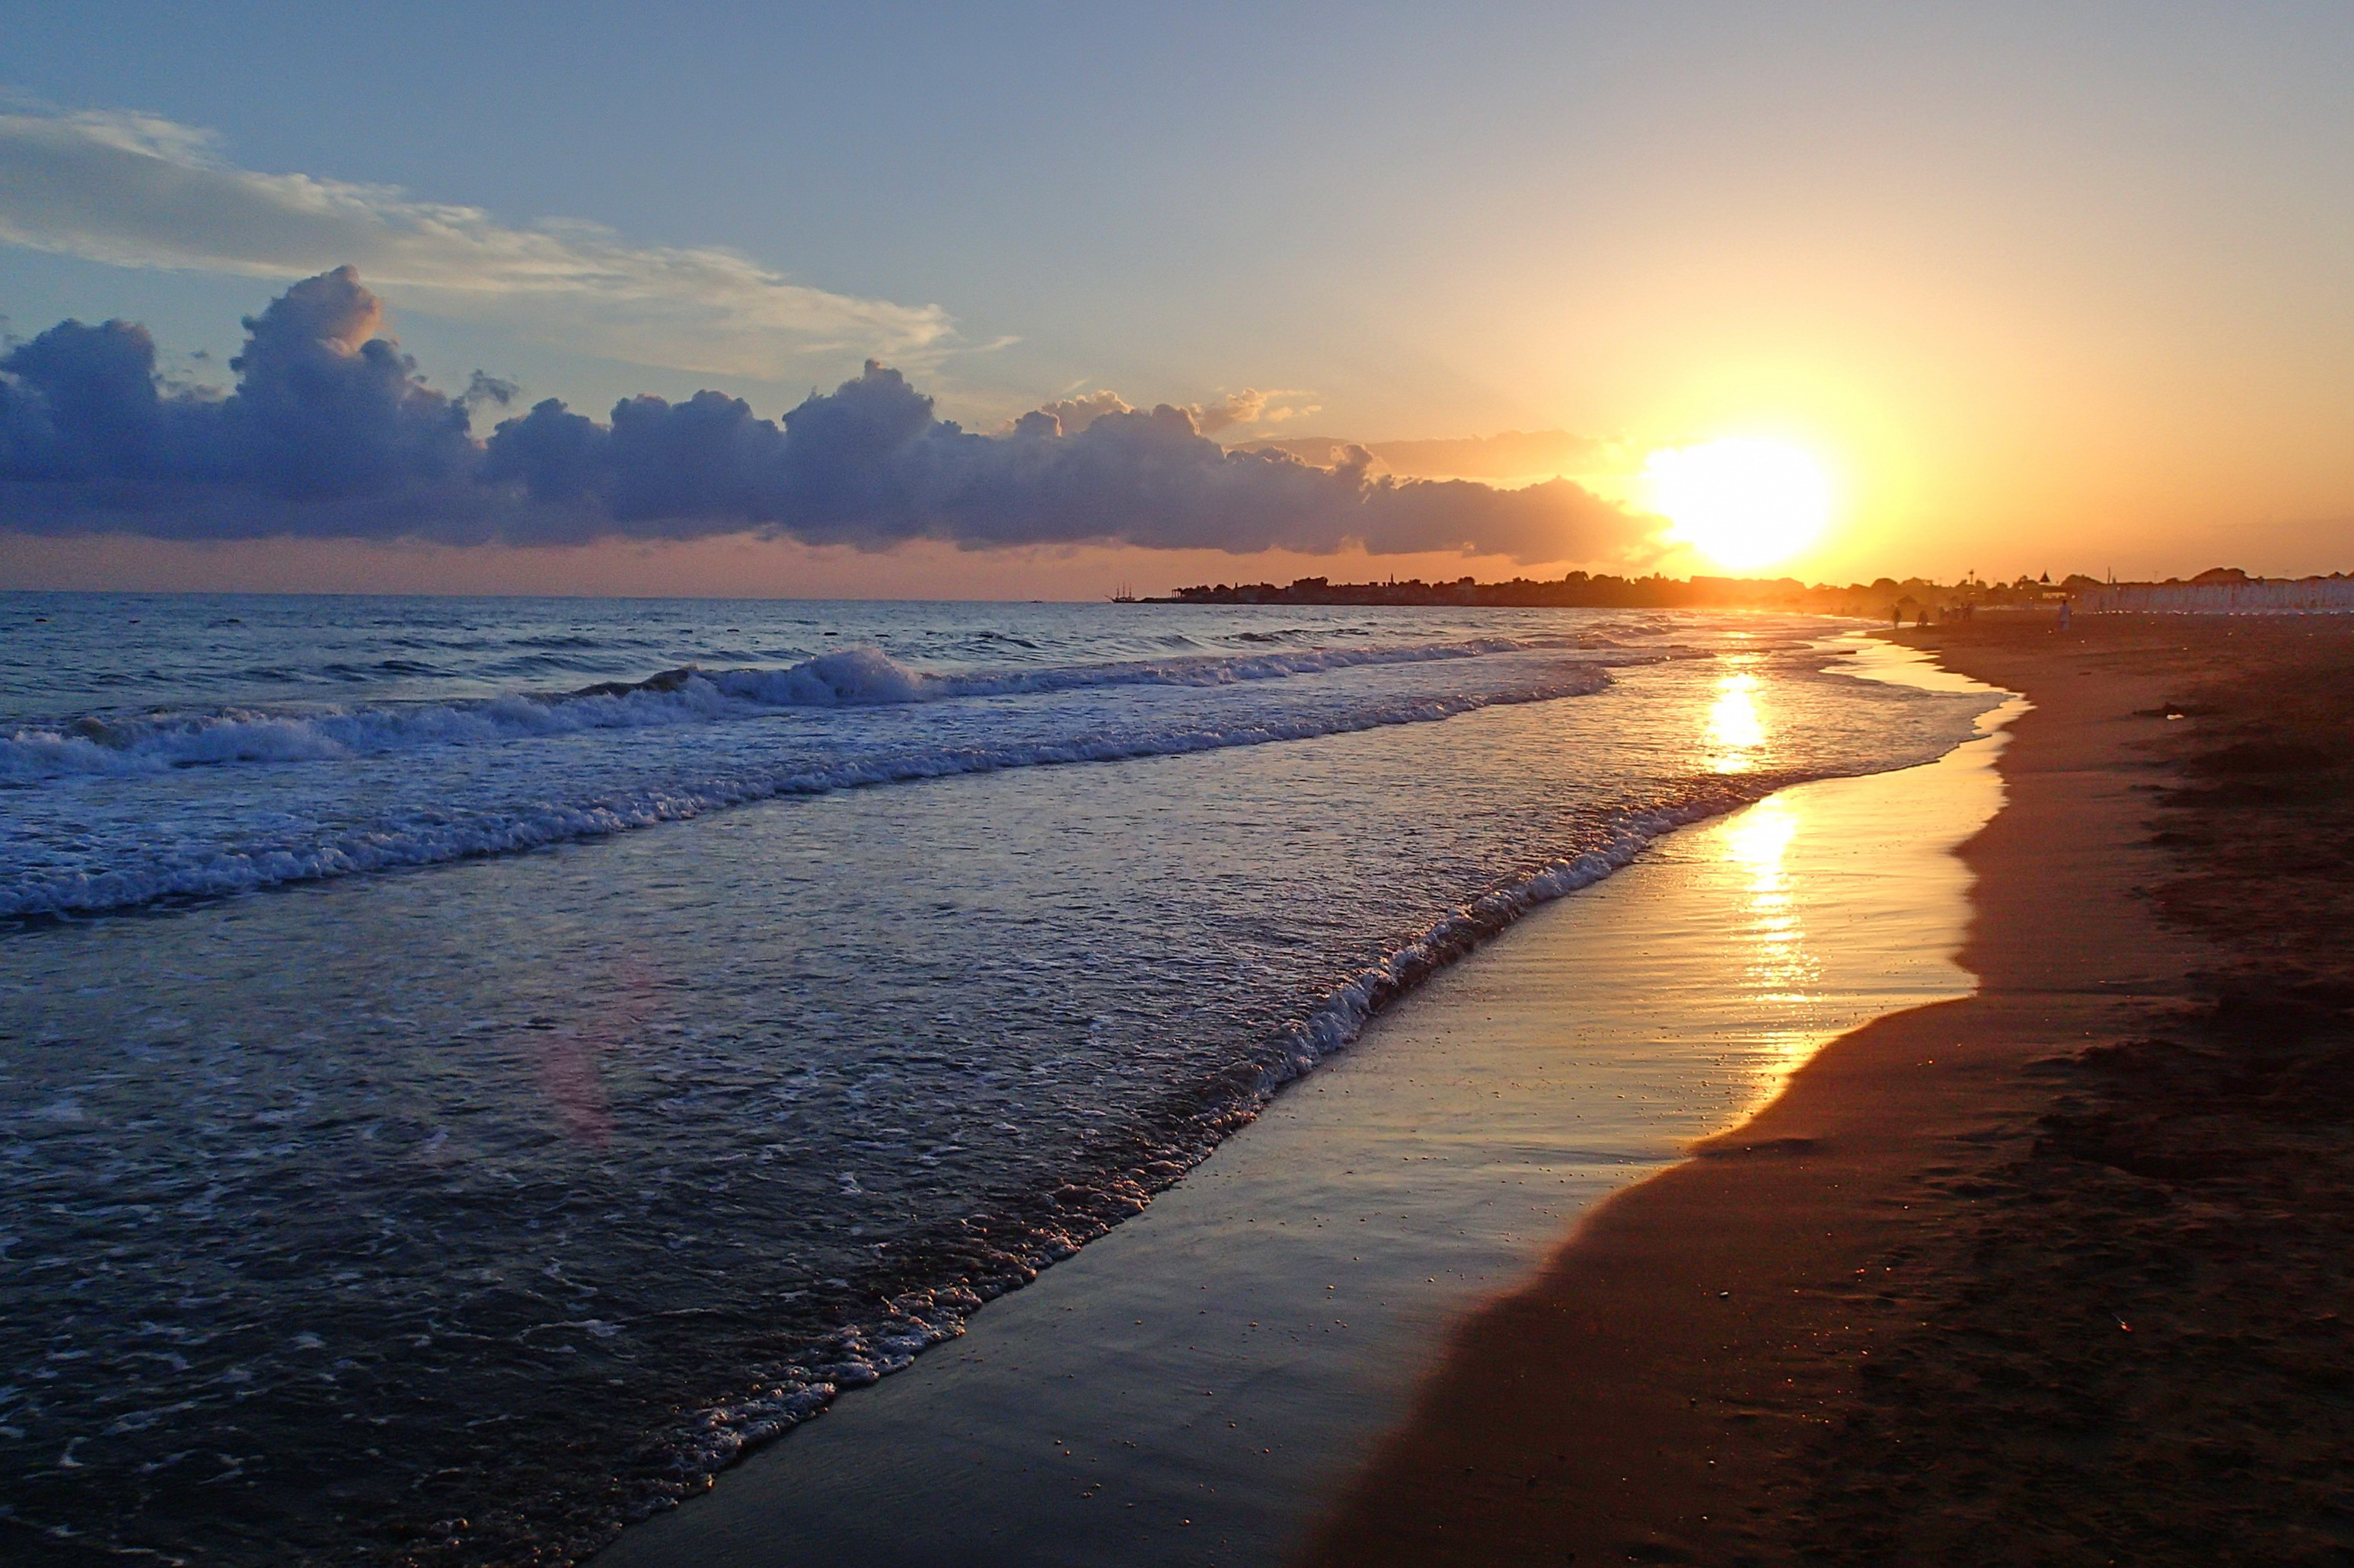 It was a beautiful summer. Красивый закат. Рассвет на море. Солнце пляж. Красивое море.